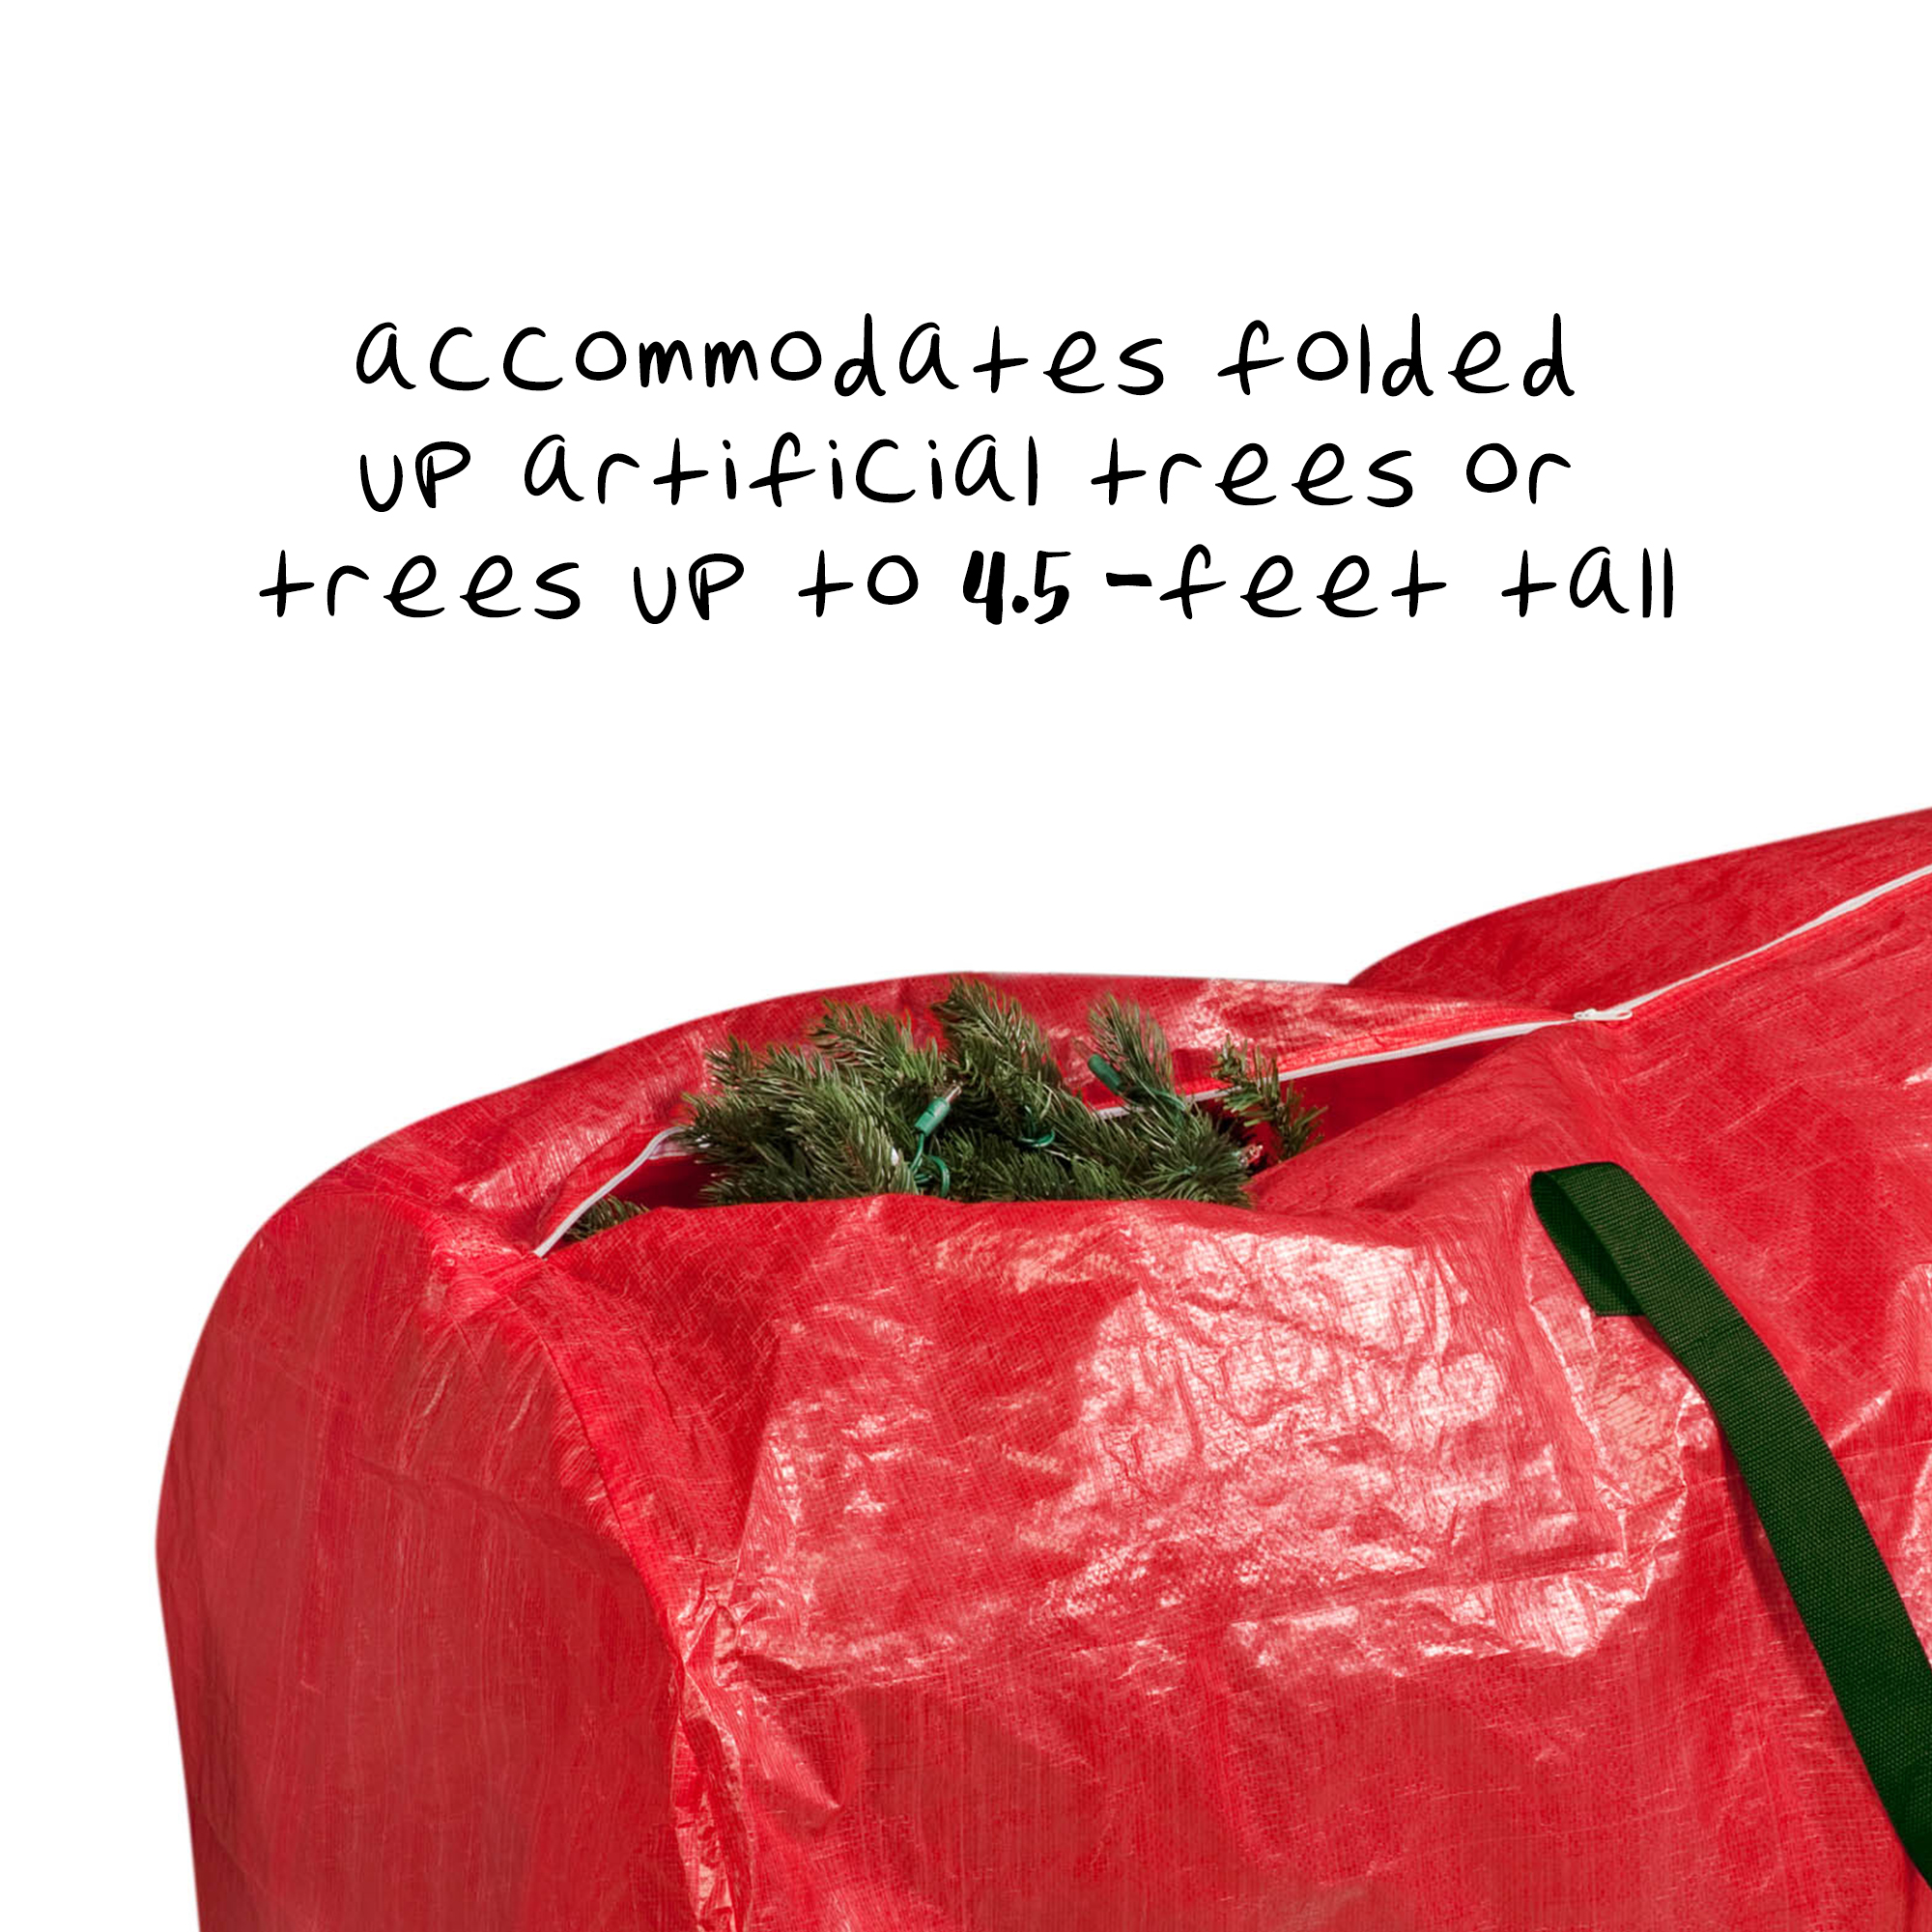 Honey-Can-Do Polyethylene 7' Christmas Tree Storage Bag with Handles, Red - image 5 of 6